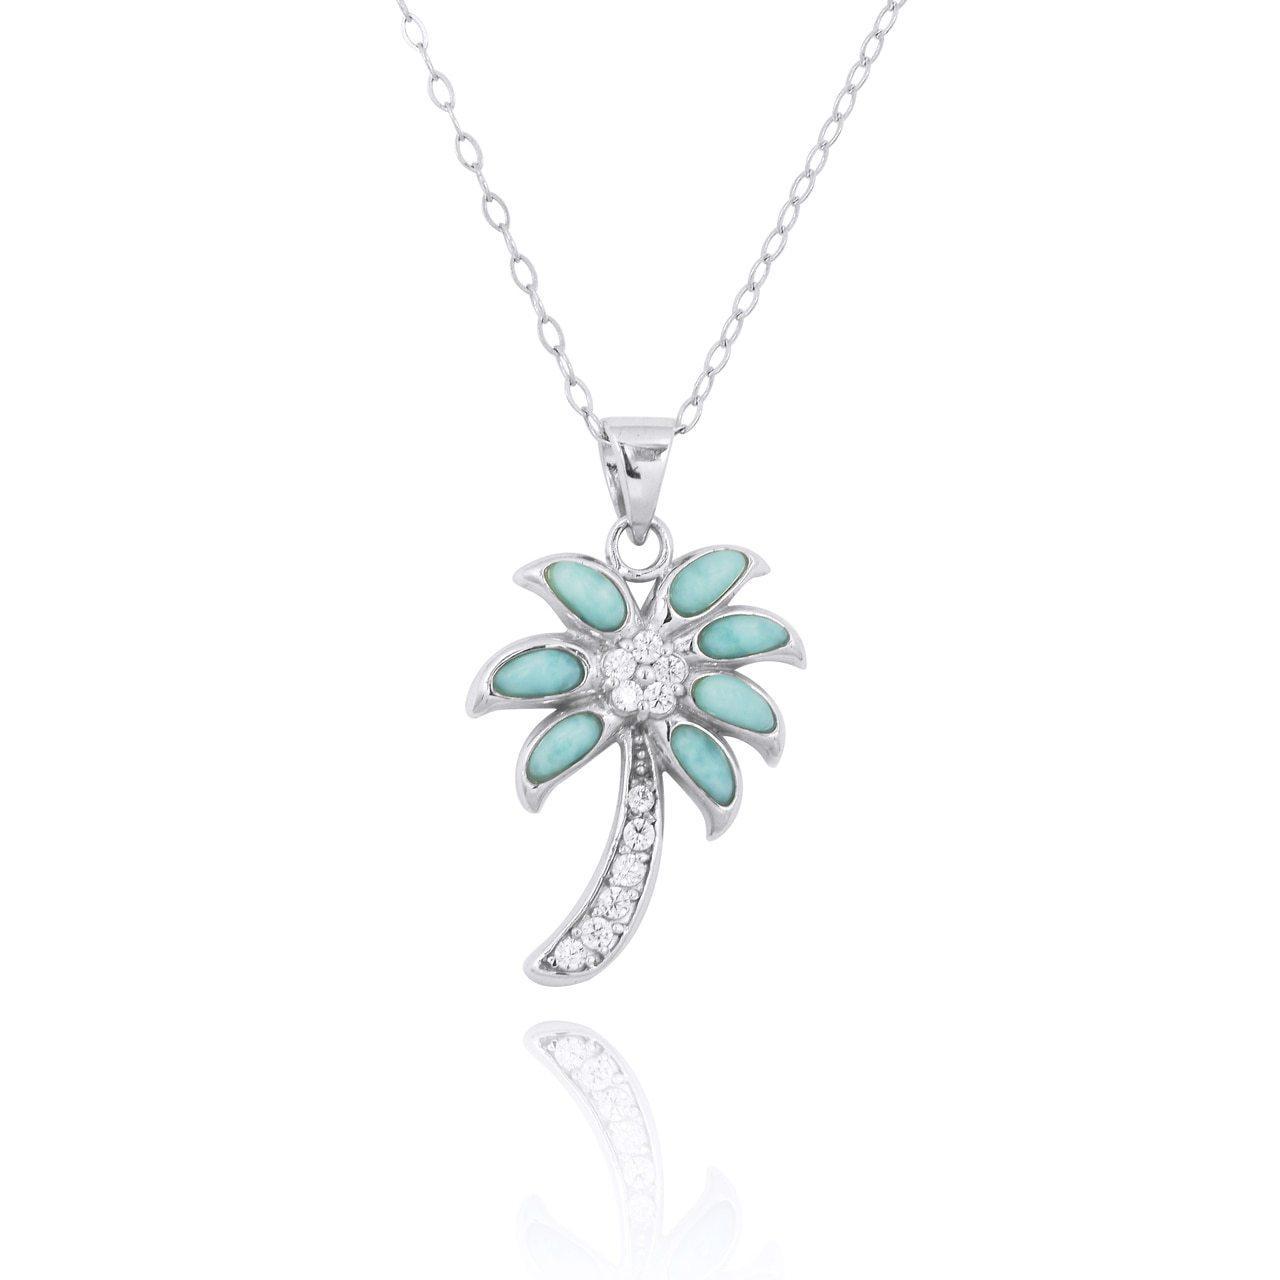 Palm tree necklace - Jude Karnon Jewellery